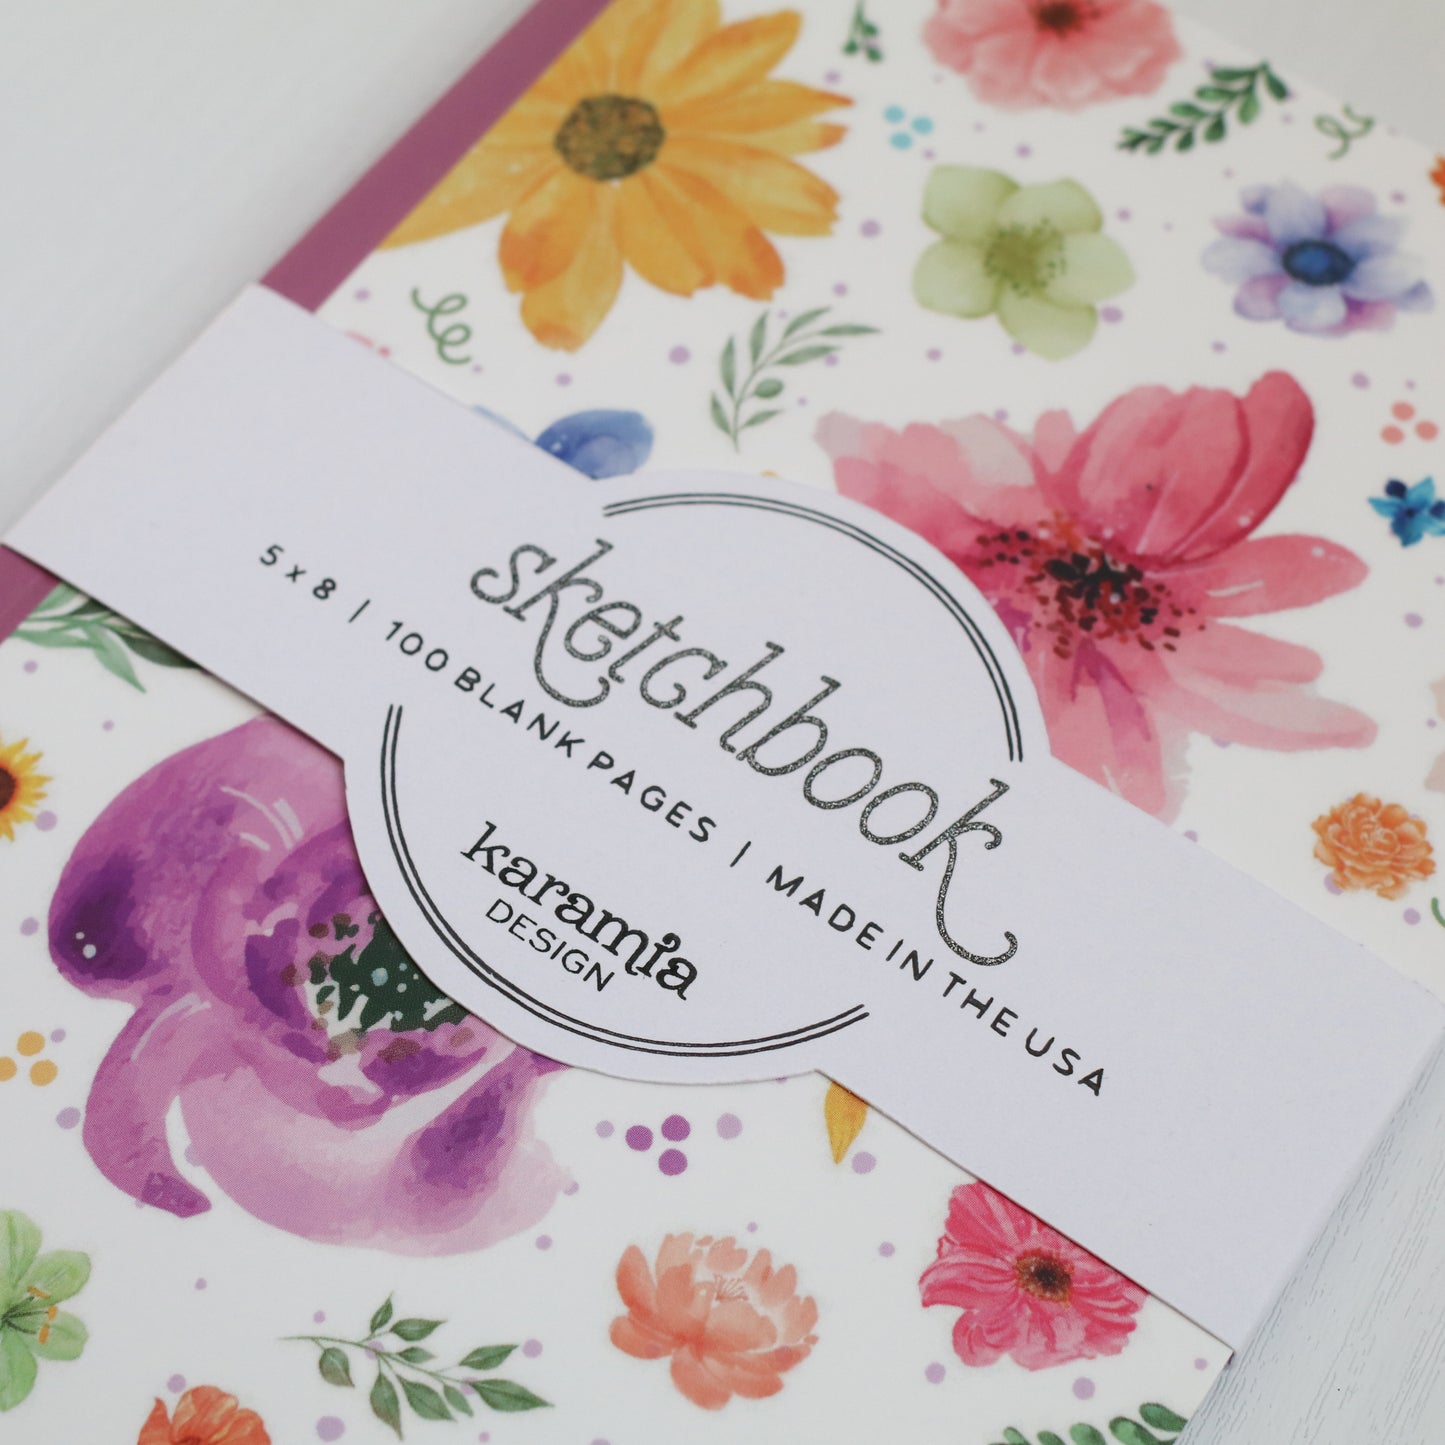 Watercolor Blooms Sketchbook & Notebook